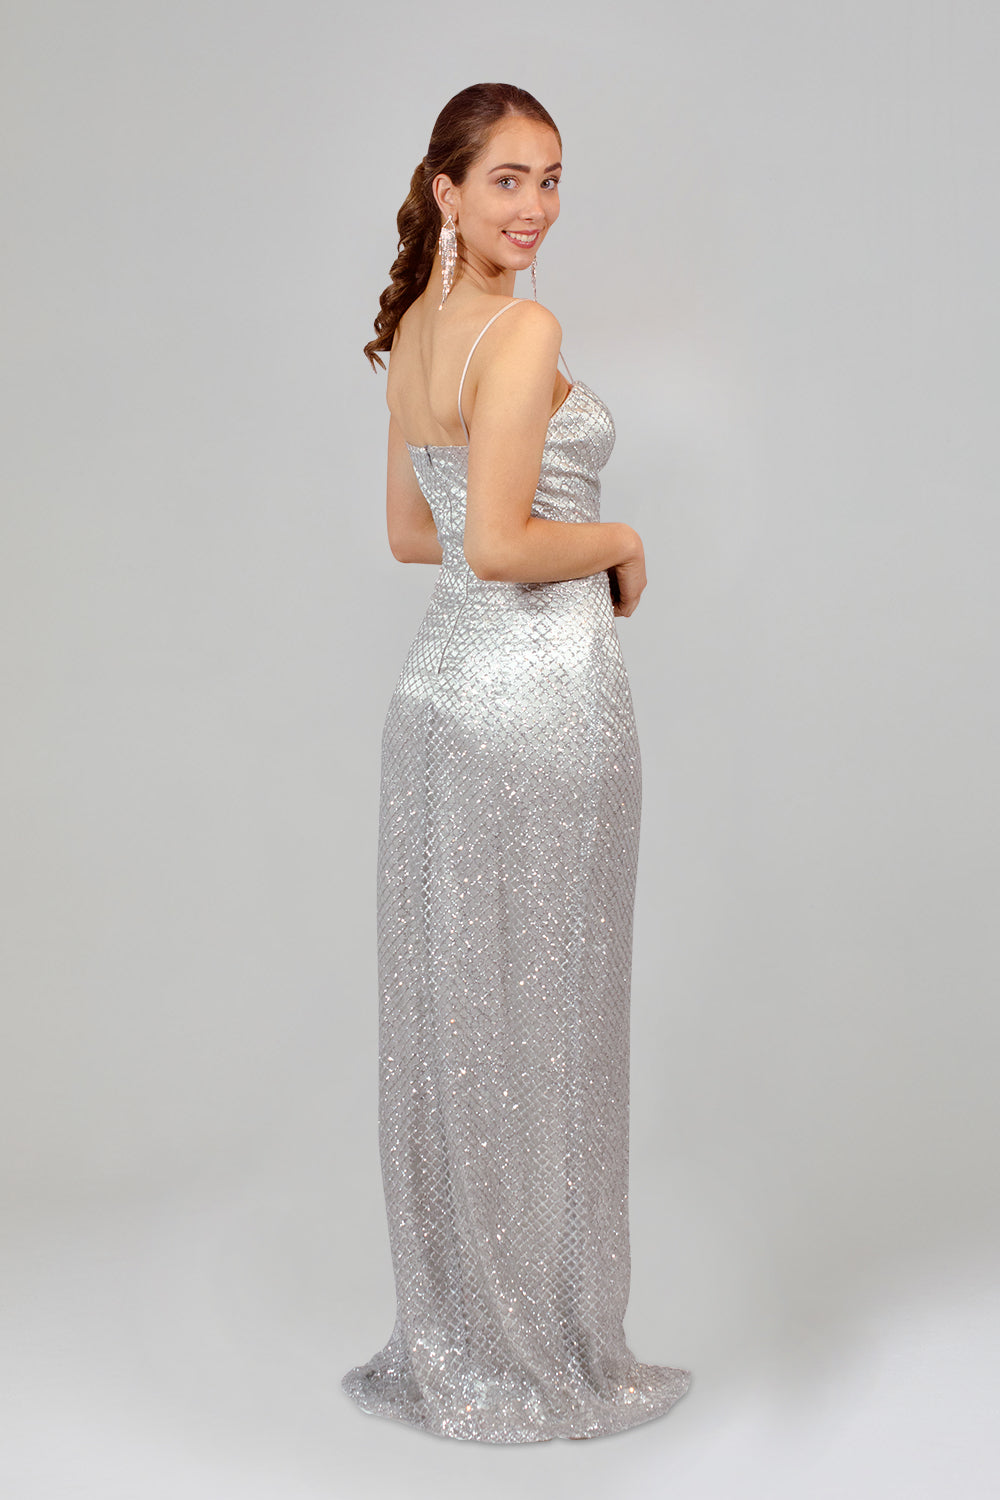 custom made to order silver formal bridesmaid dresses australia envious bridal & formal